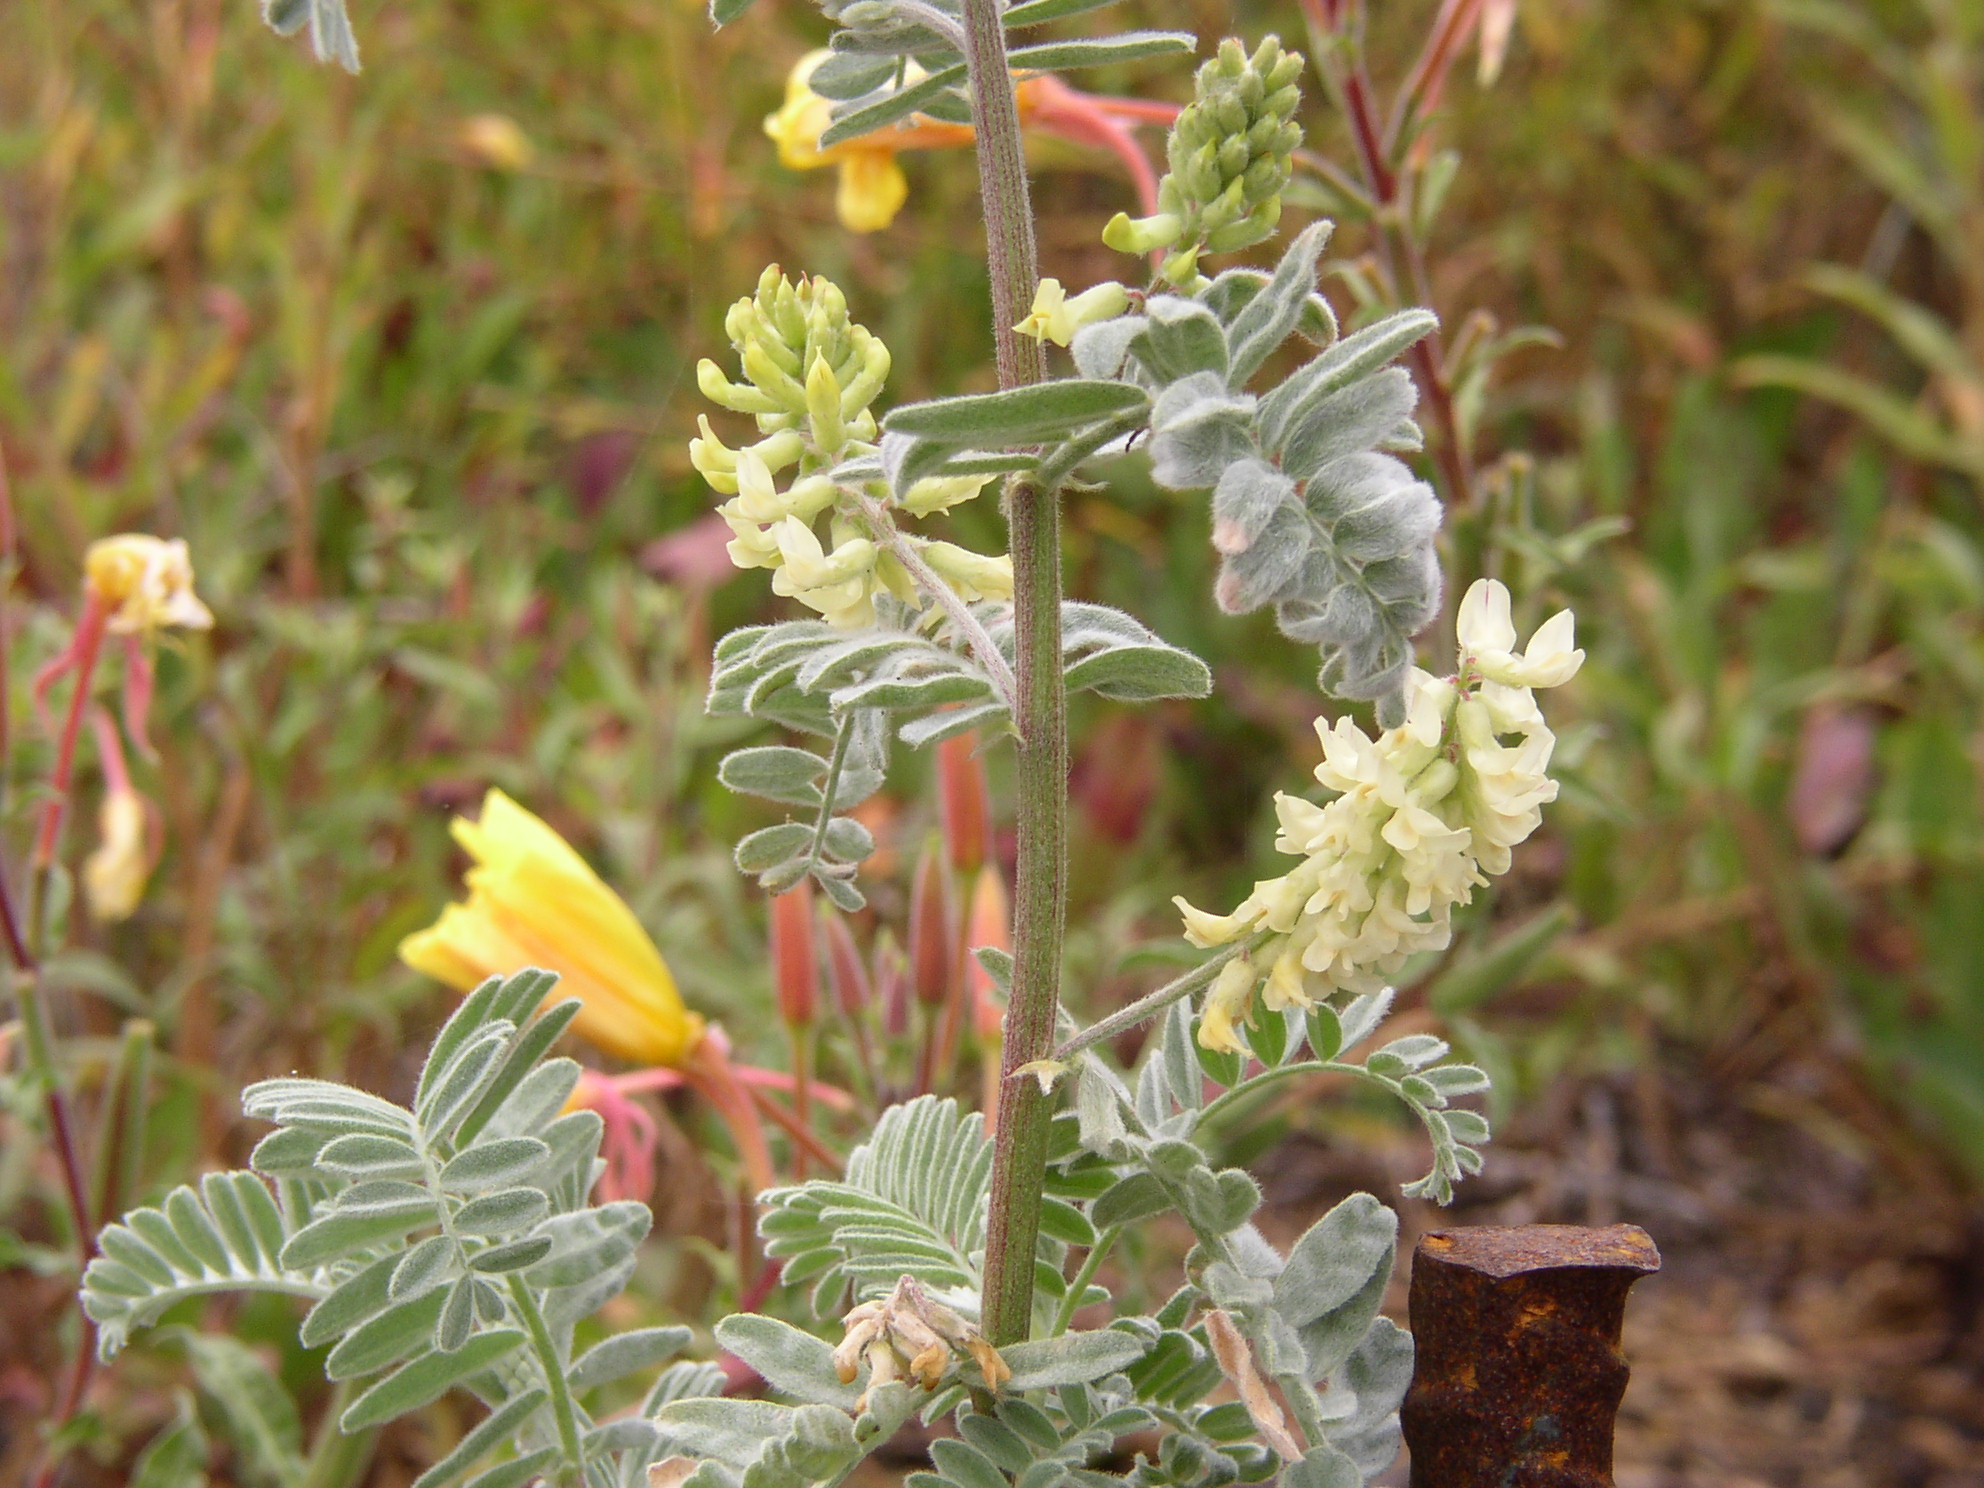 Astragalus pycnostachyus var. lanosissimus